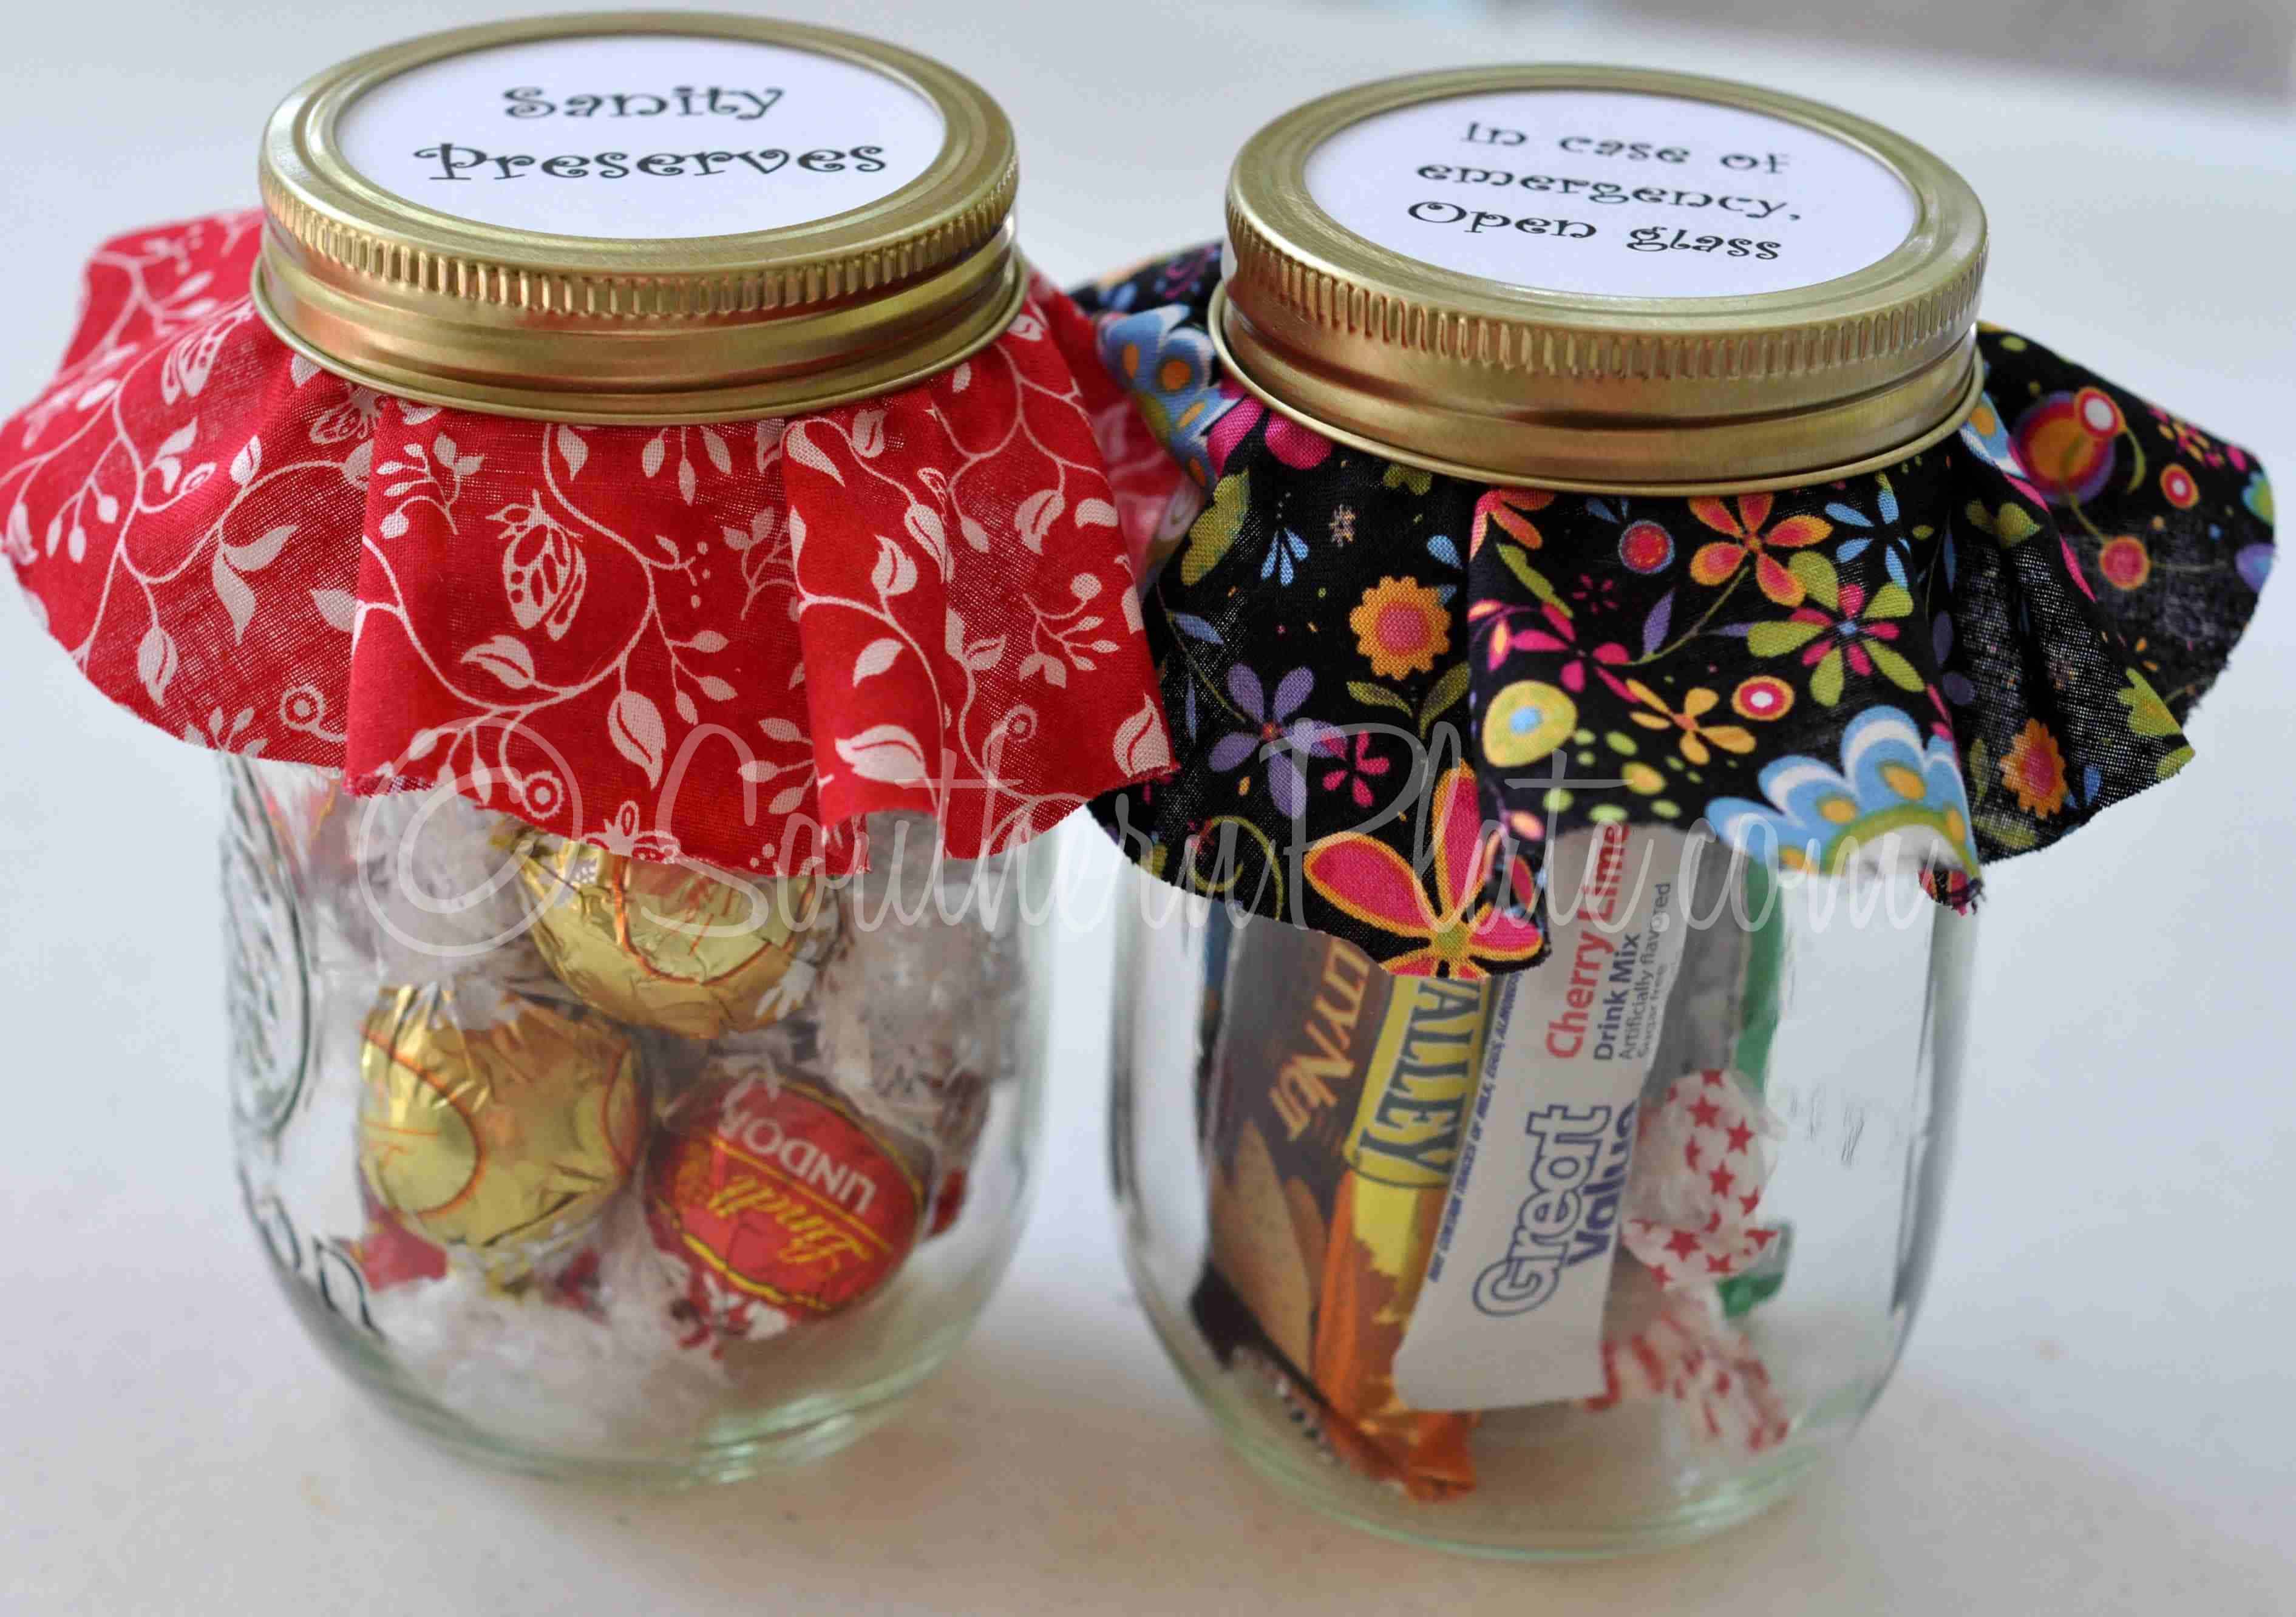 Candy Bar Teacher Appreciation Gifts - Crazy Little Projects